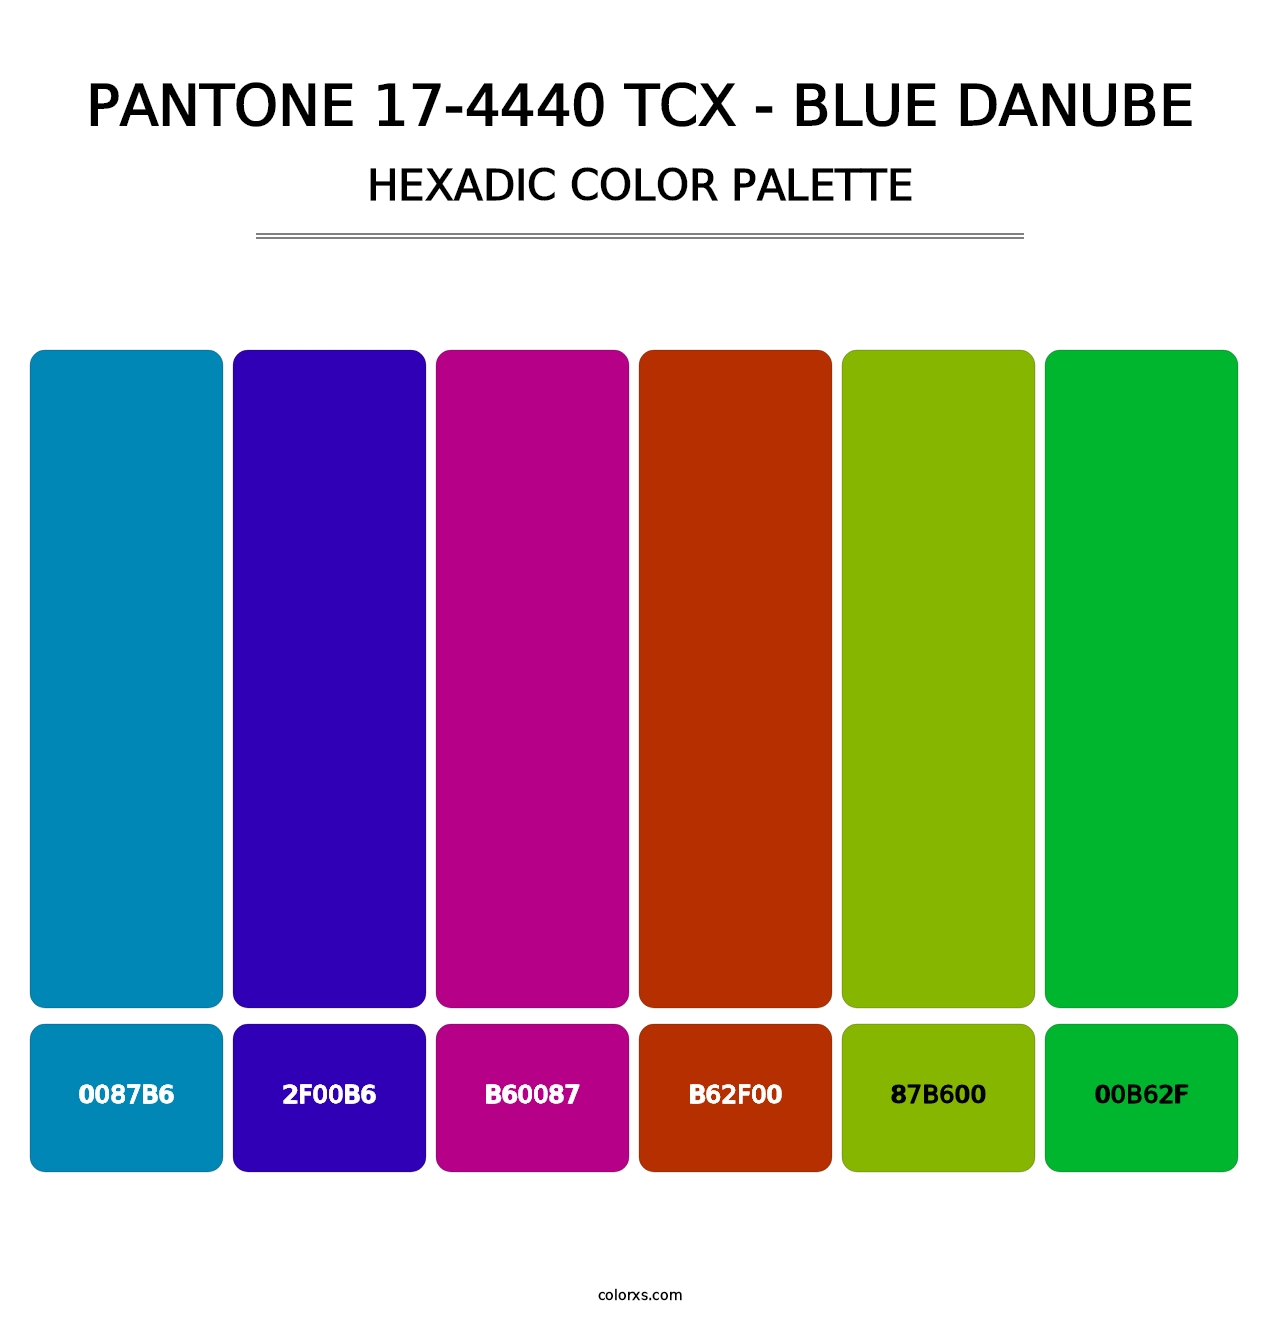 PANTONE 17-4440 TCX - Blue Danube - Hexadic Color Palette